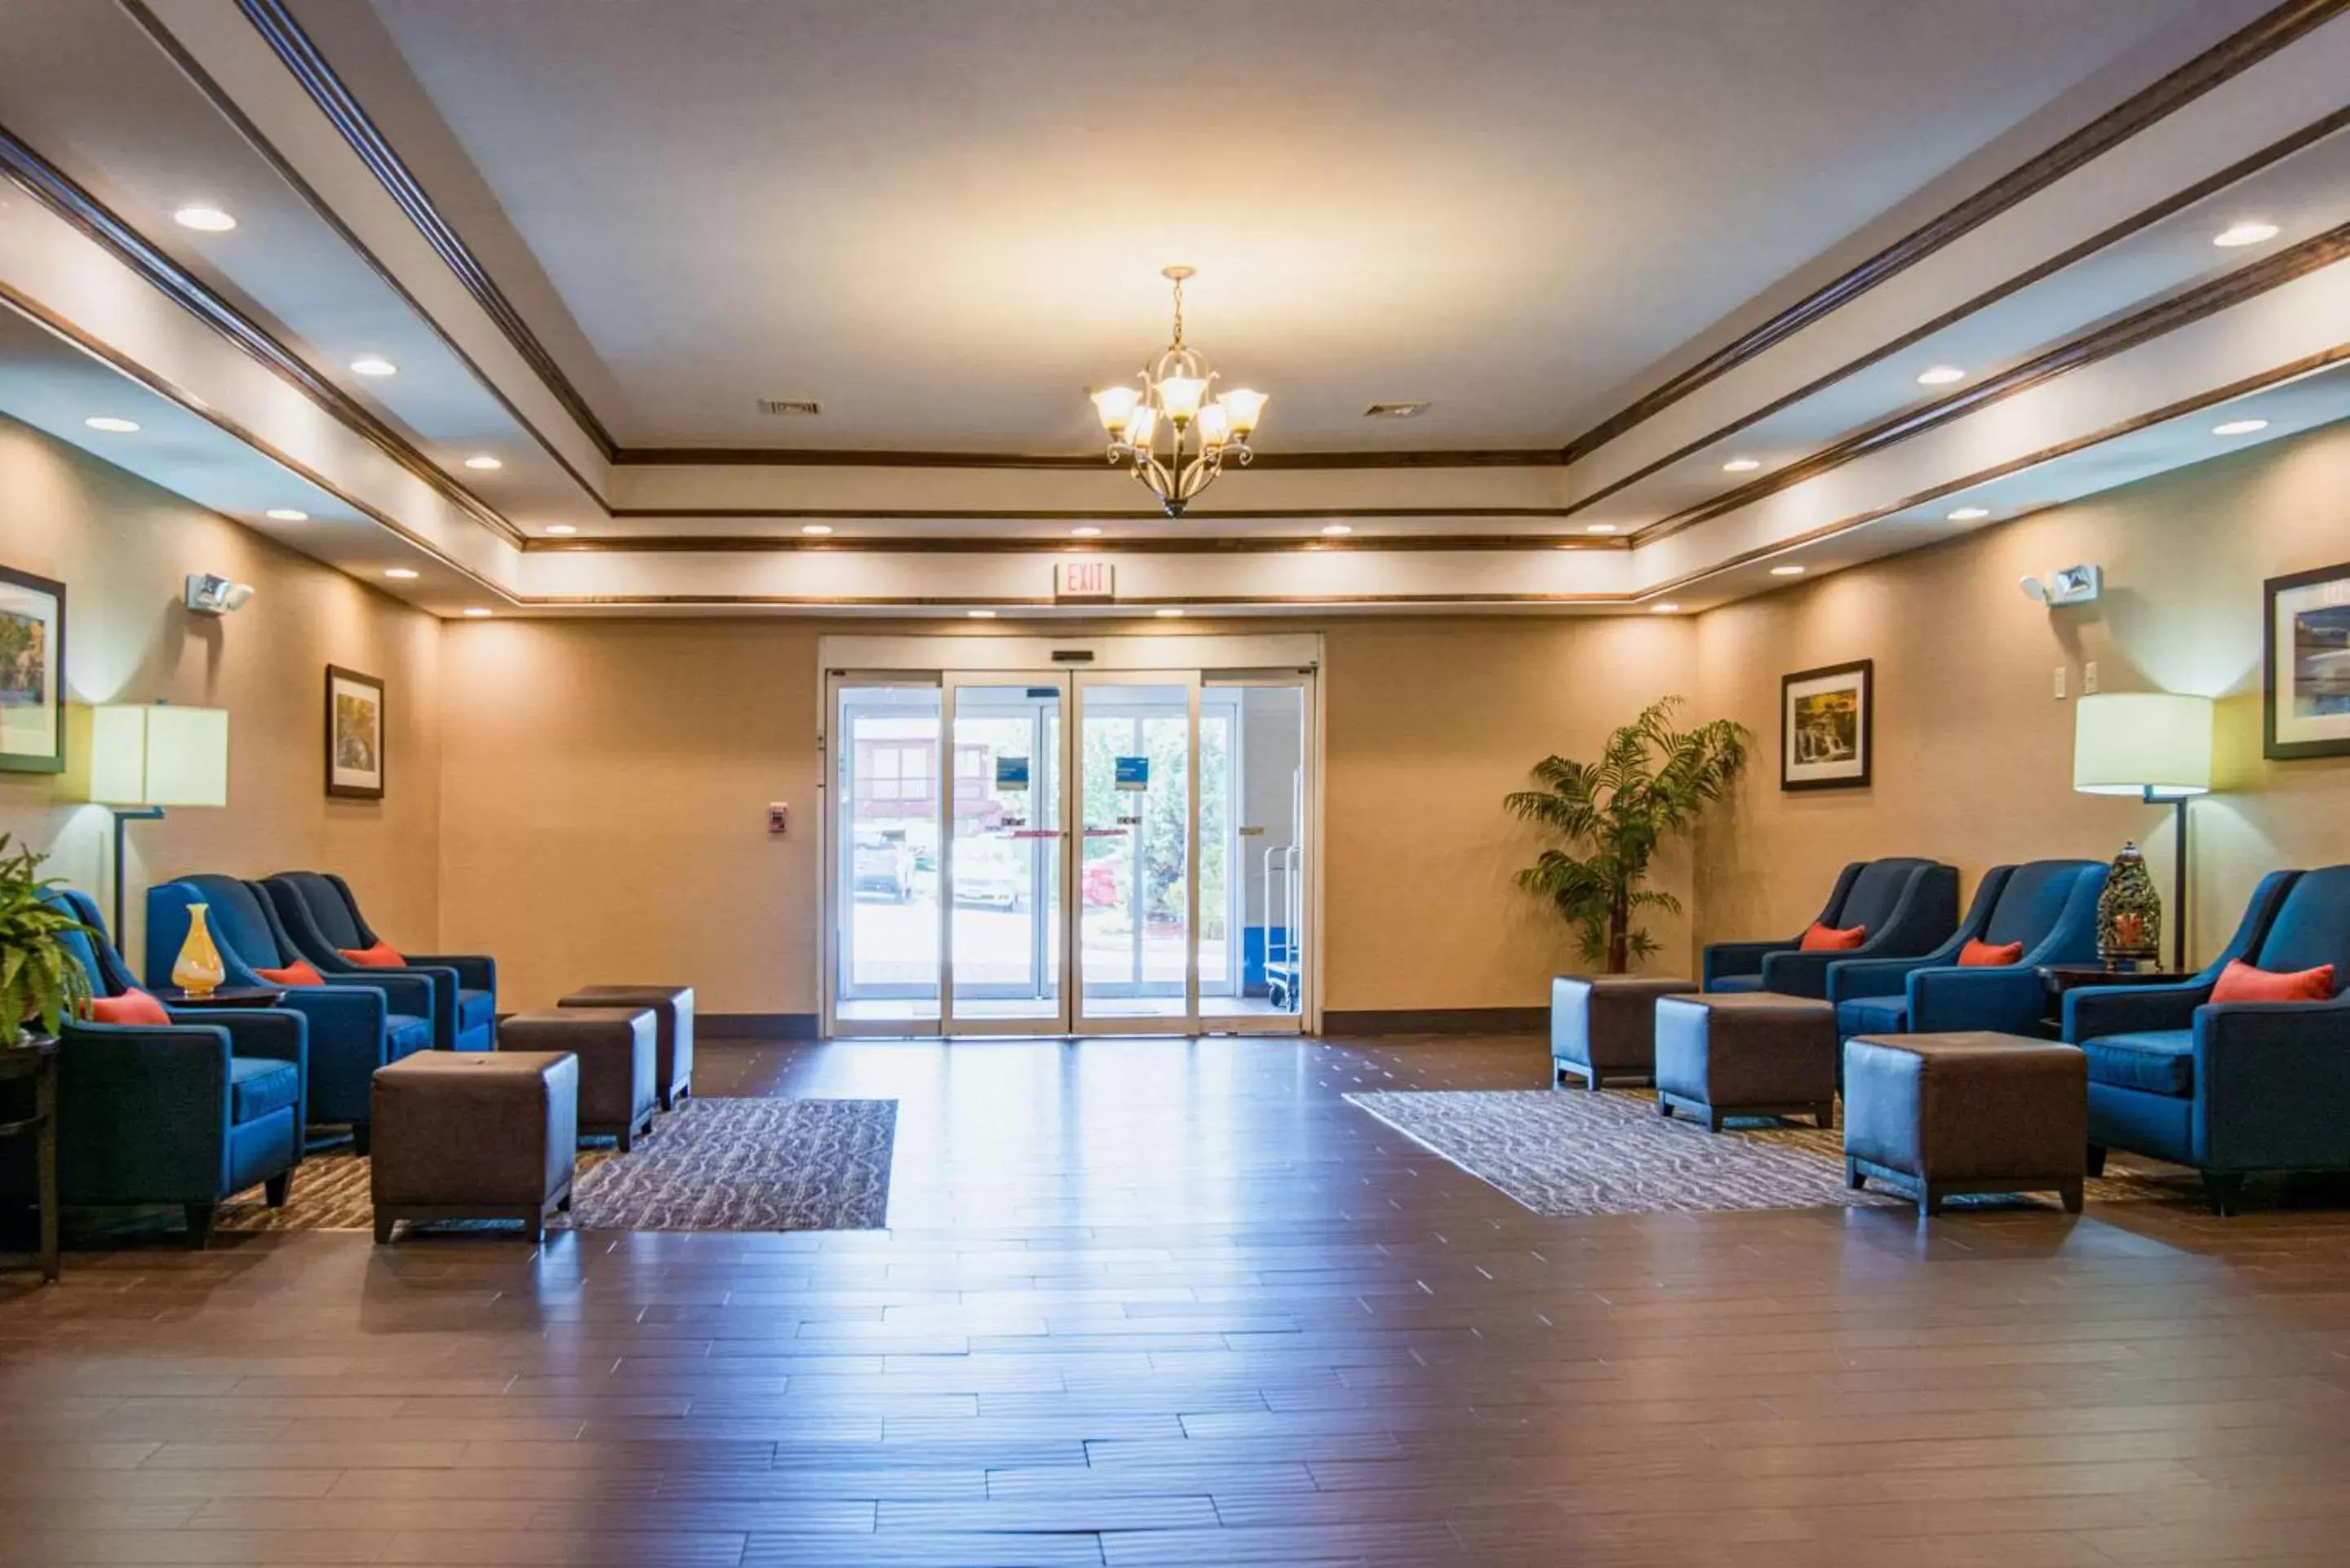 Lobby or reception in Comfort Inn Naugatuck-Shelton, CT